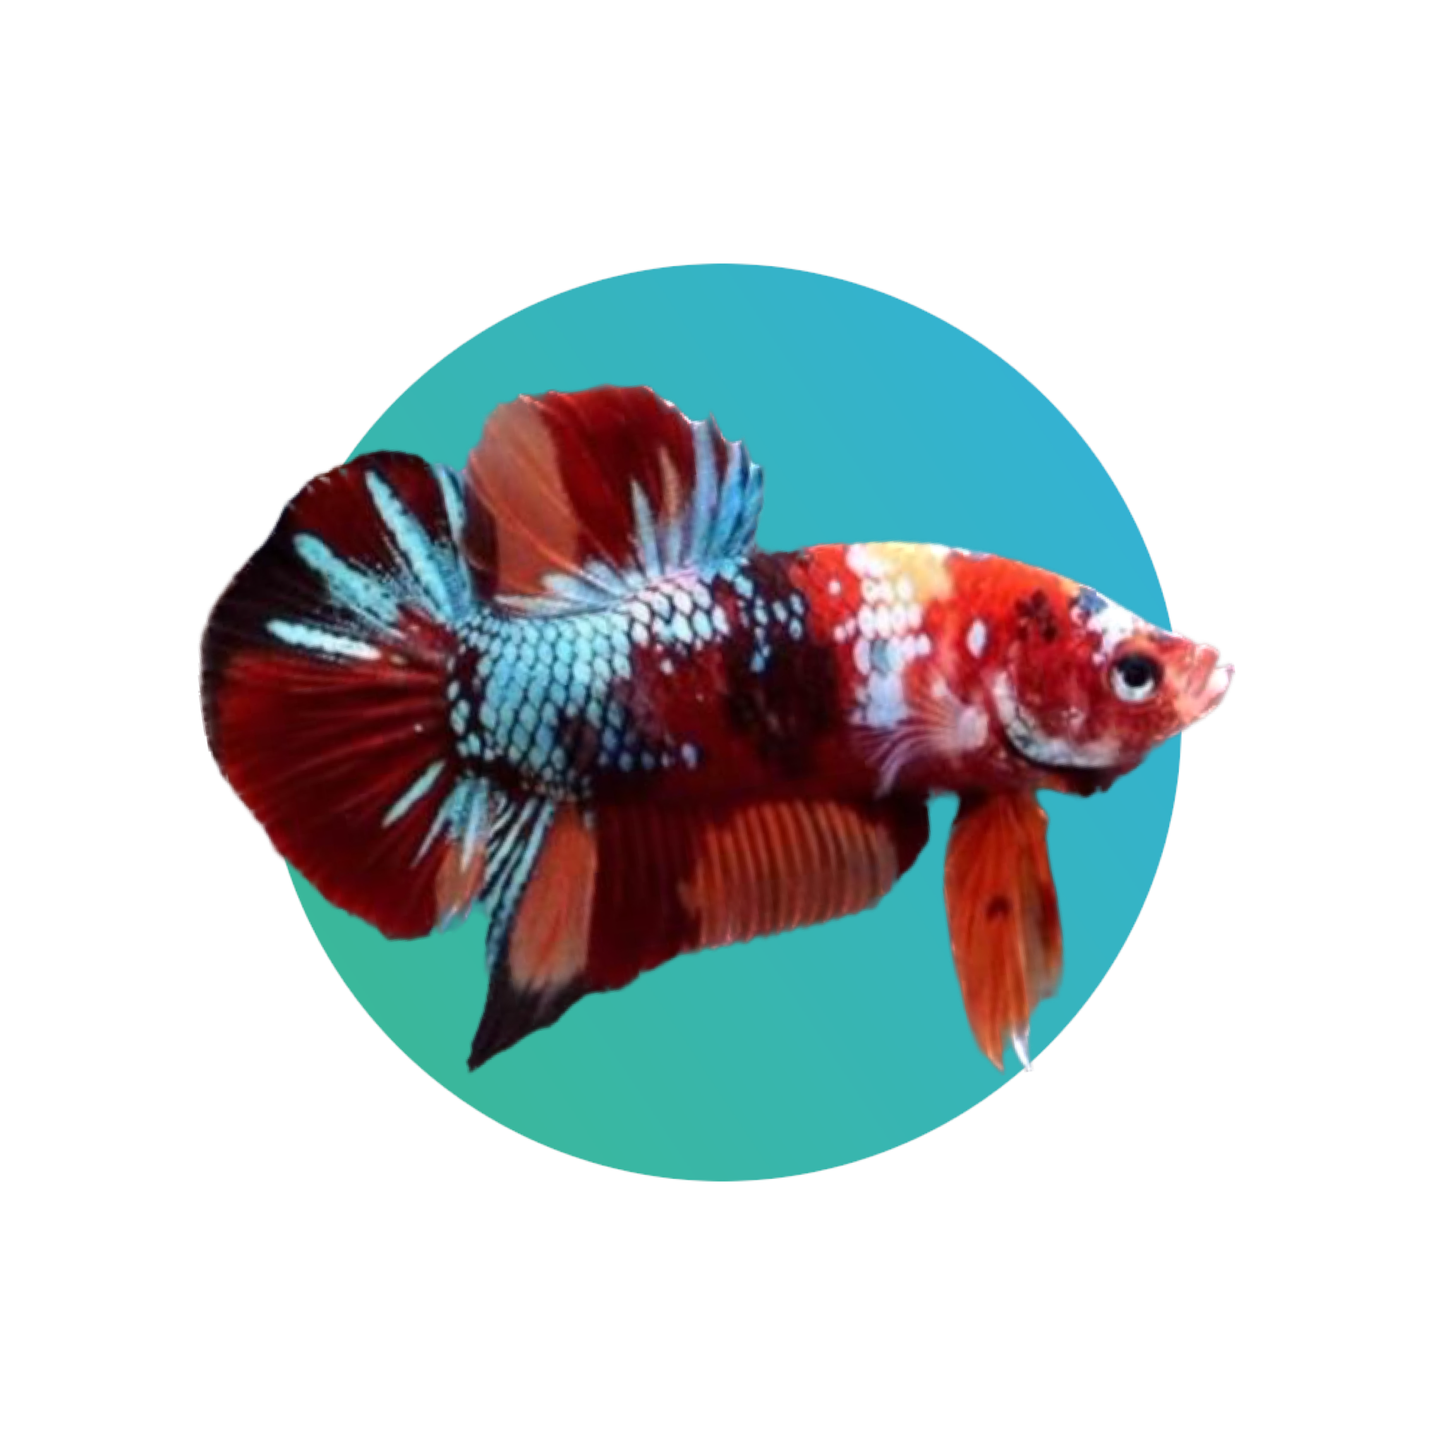 Round tail (Plakat) betta male (fighter fish)